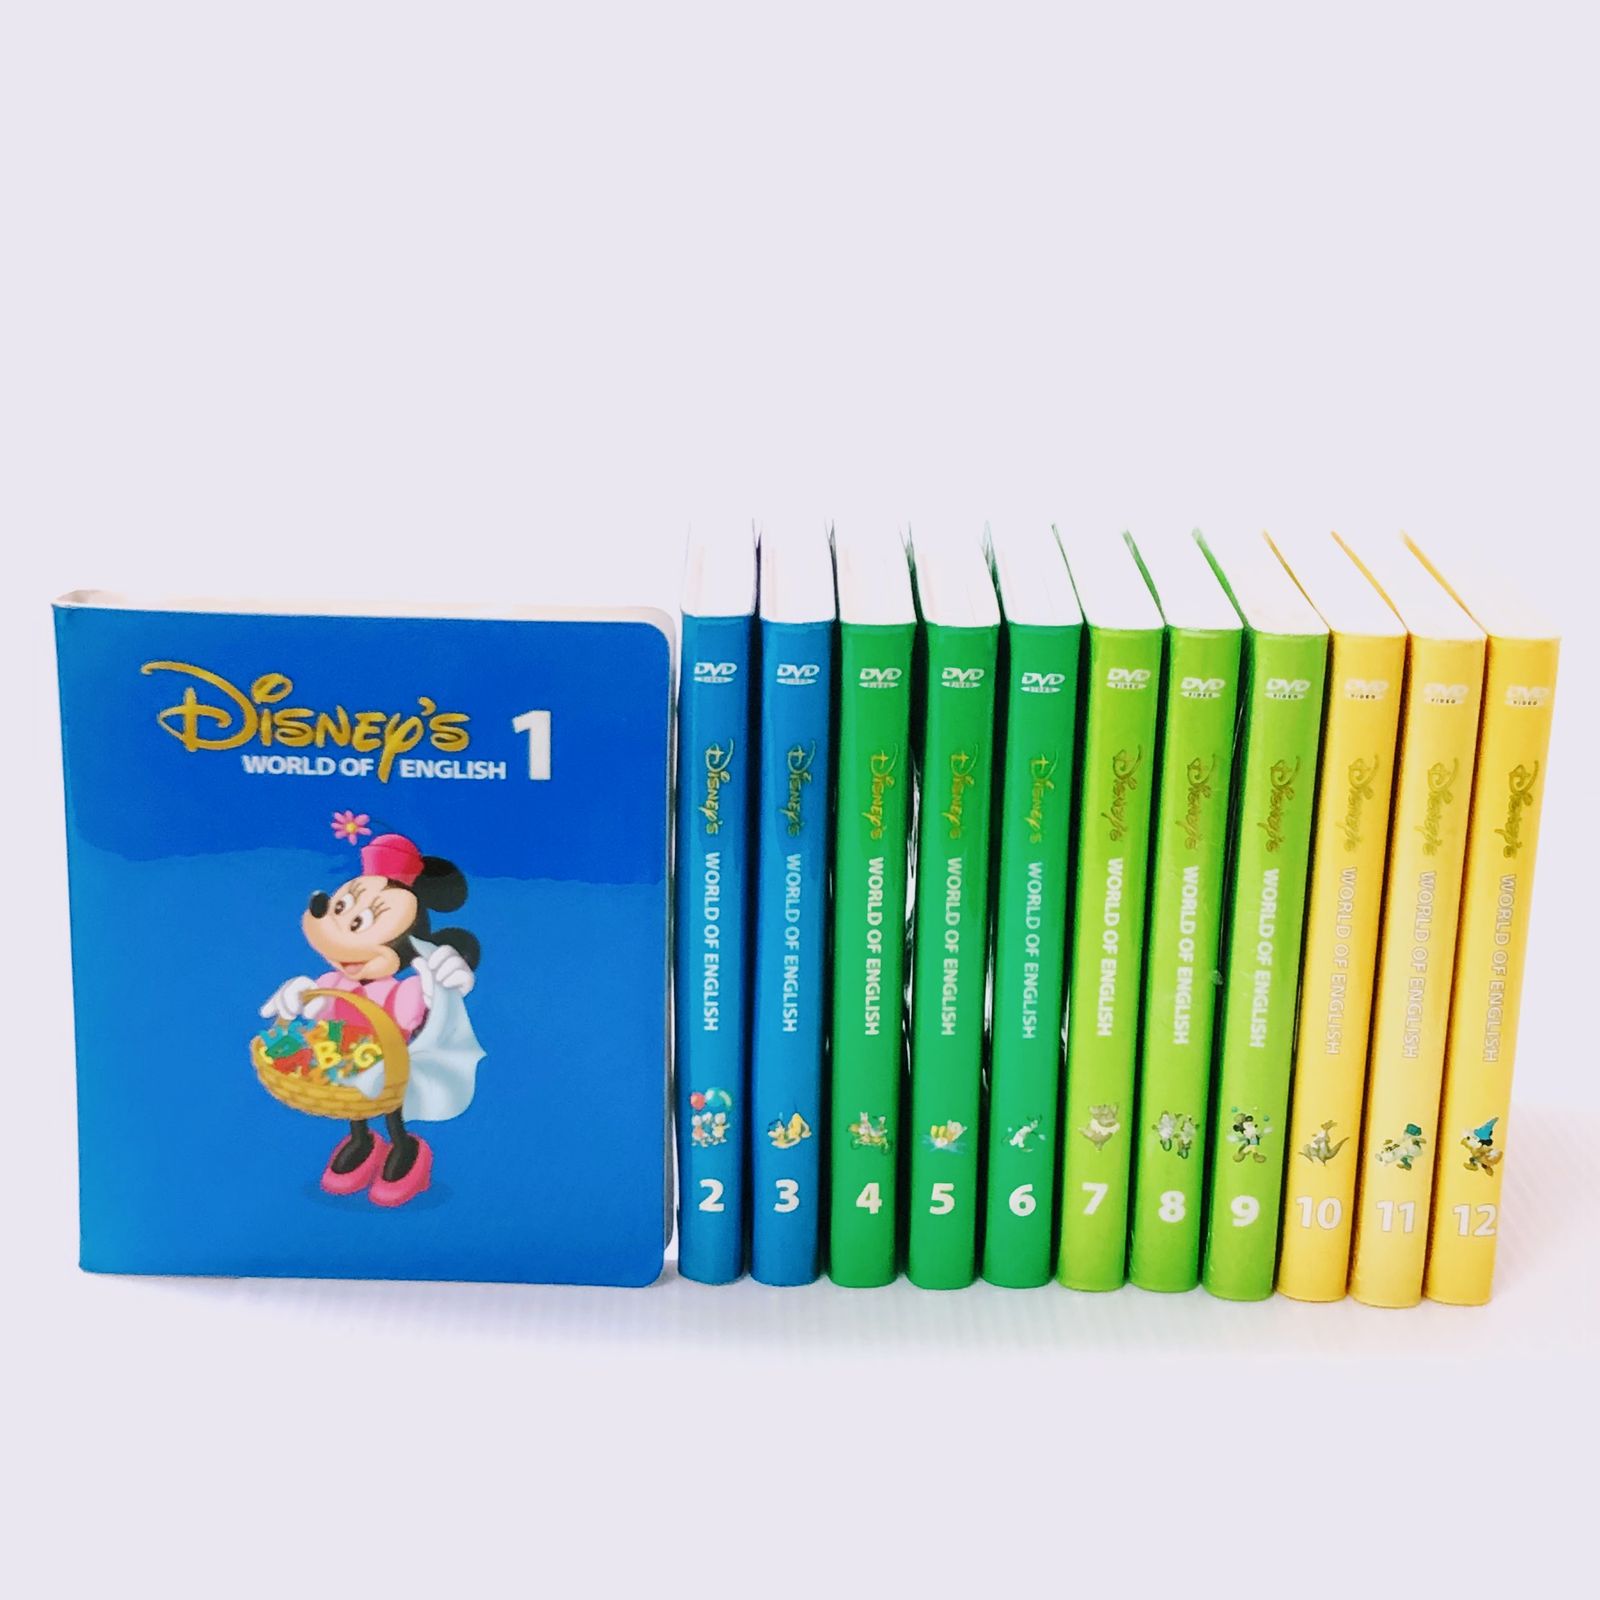 DWE ディズニー英語システム ストレートプレイ DVD - 知育玩具